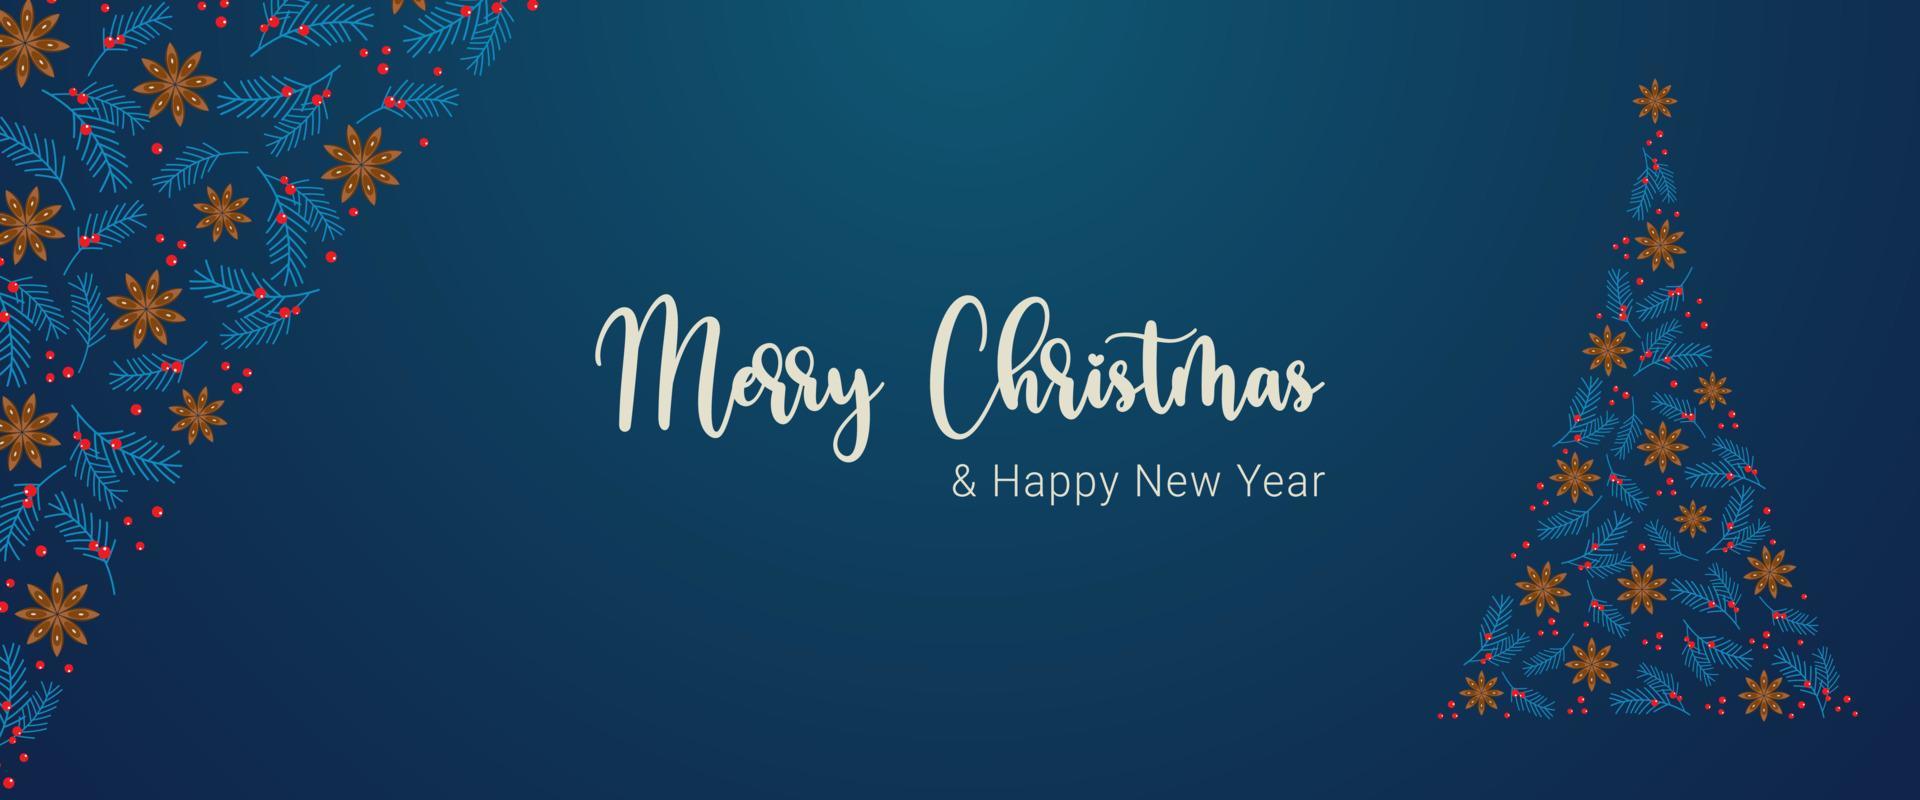 Banner Merry Christmas Happy New Year horizontal dark background blue ...